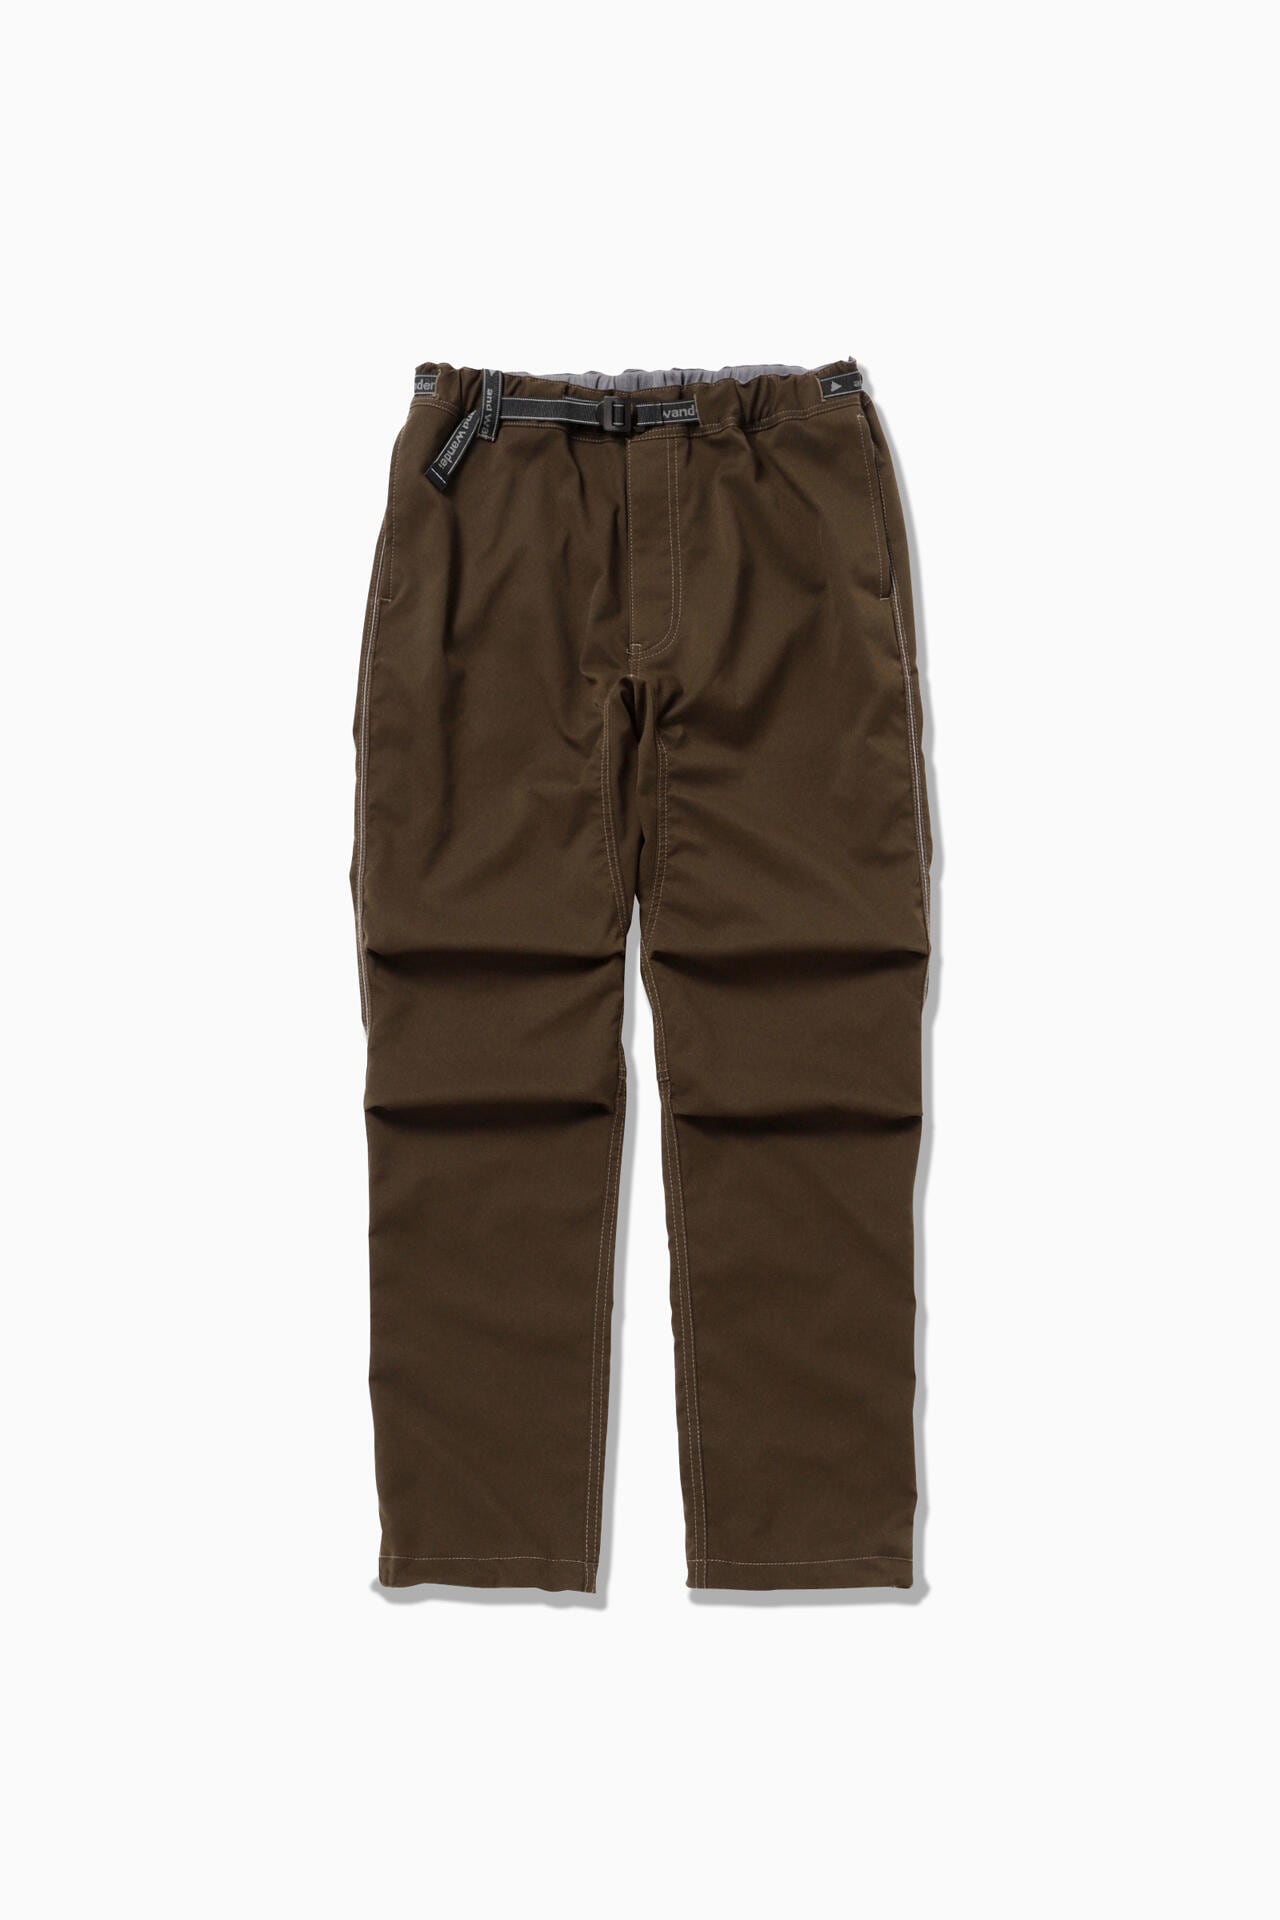 【POLYESTER climbing pants】d.khaki/ボトムス/サイズ:WM/ポリエステル 100%/日本製/公式 アンドワンダー